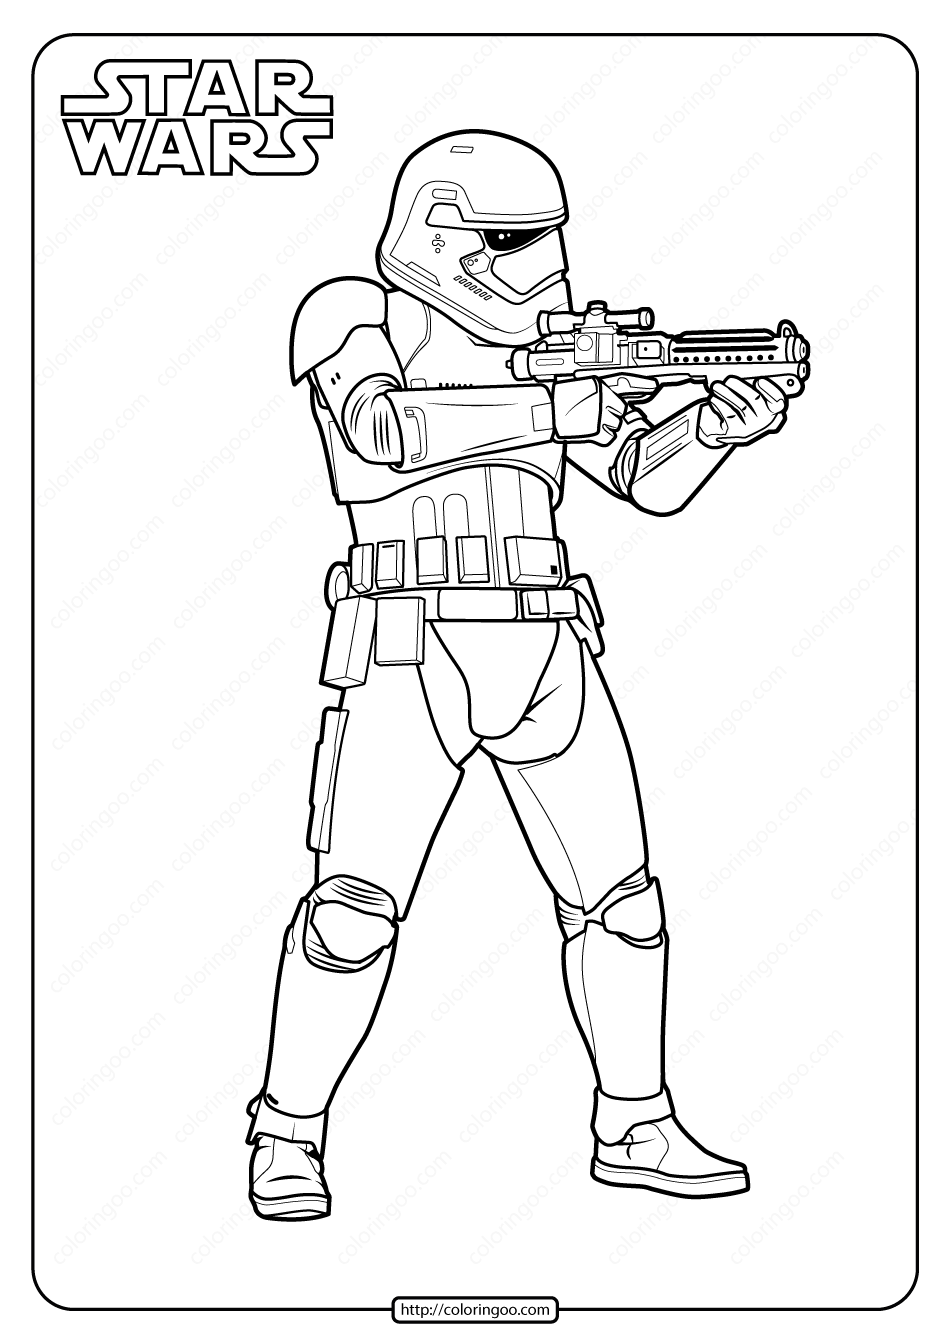 printable star wars stormtrooper coloring page